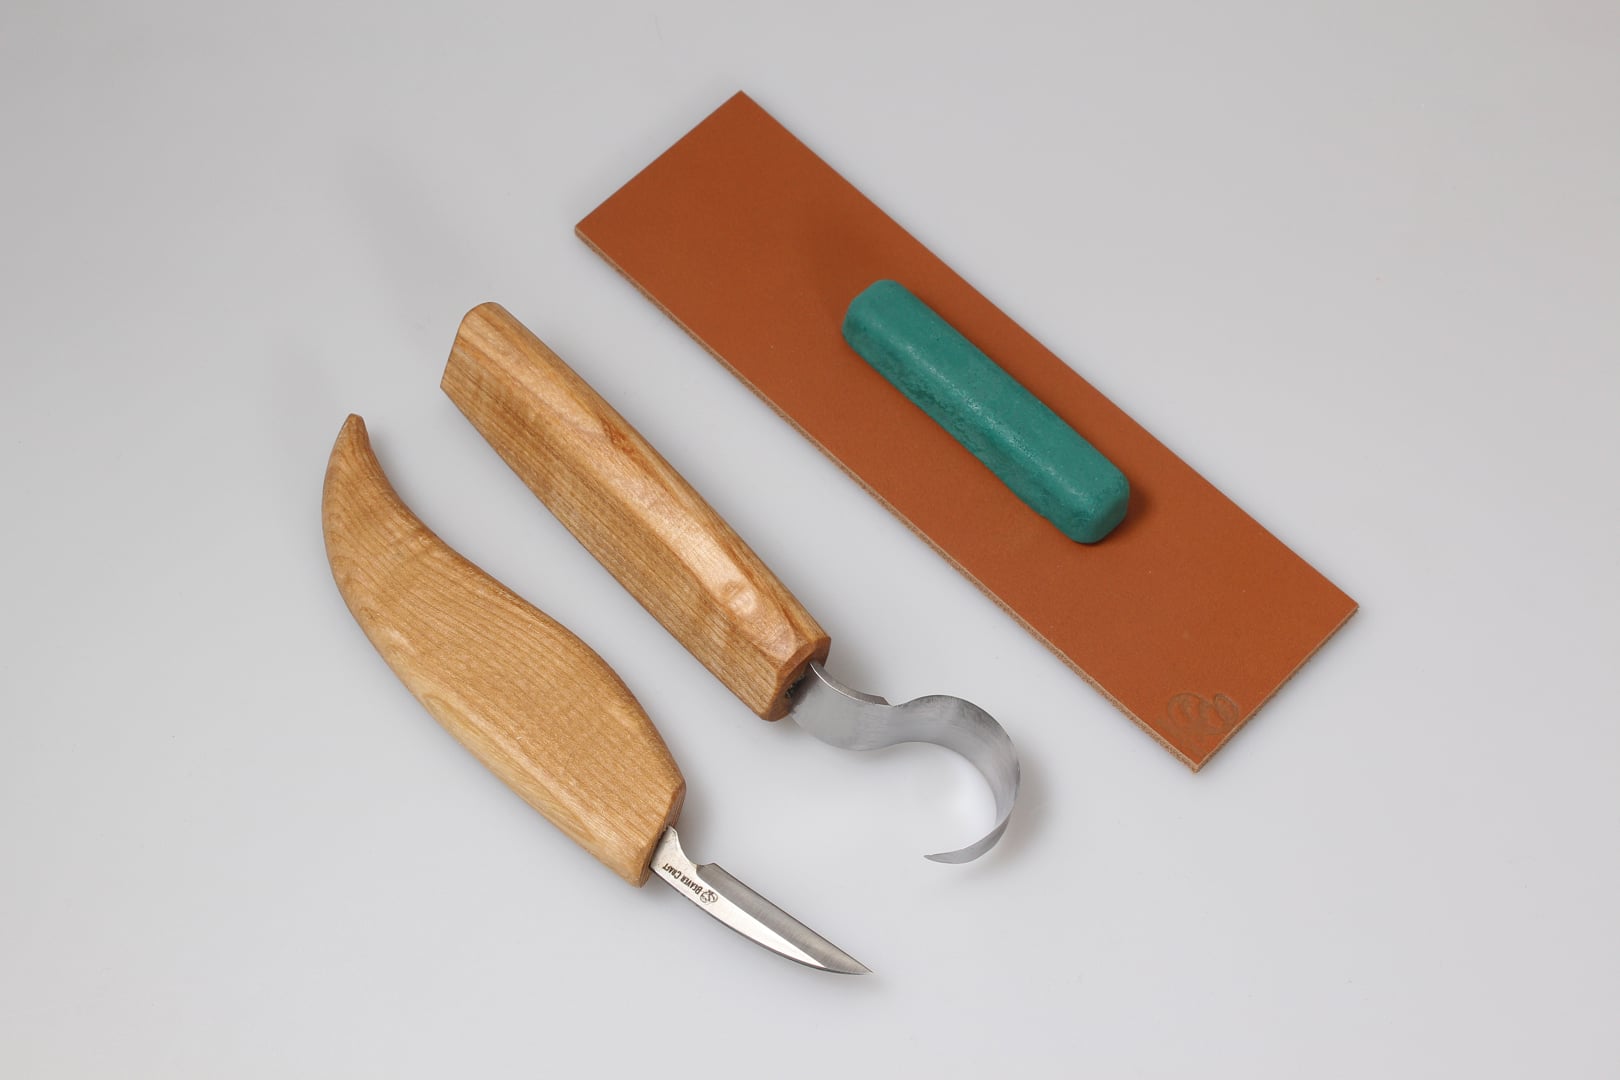 Buy 3 piece wood carving spoon set - BeaverCraft – BeaverCraft Tools